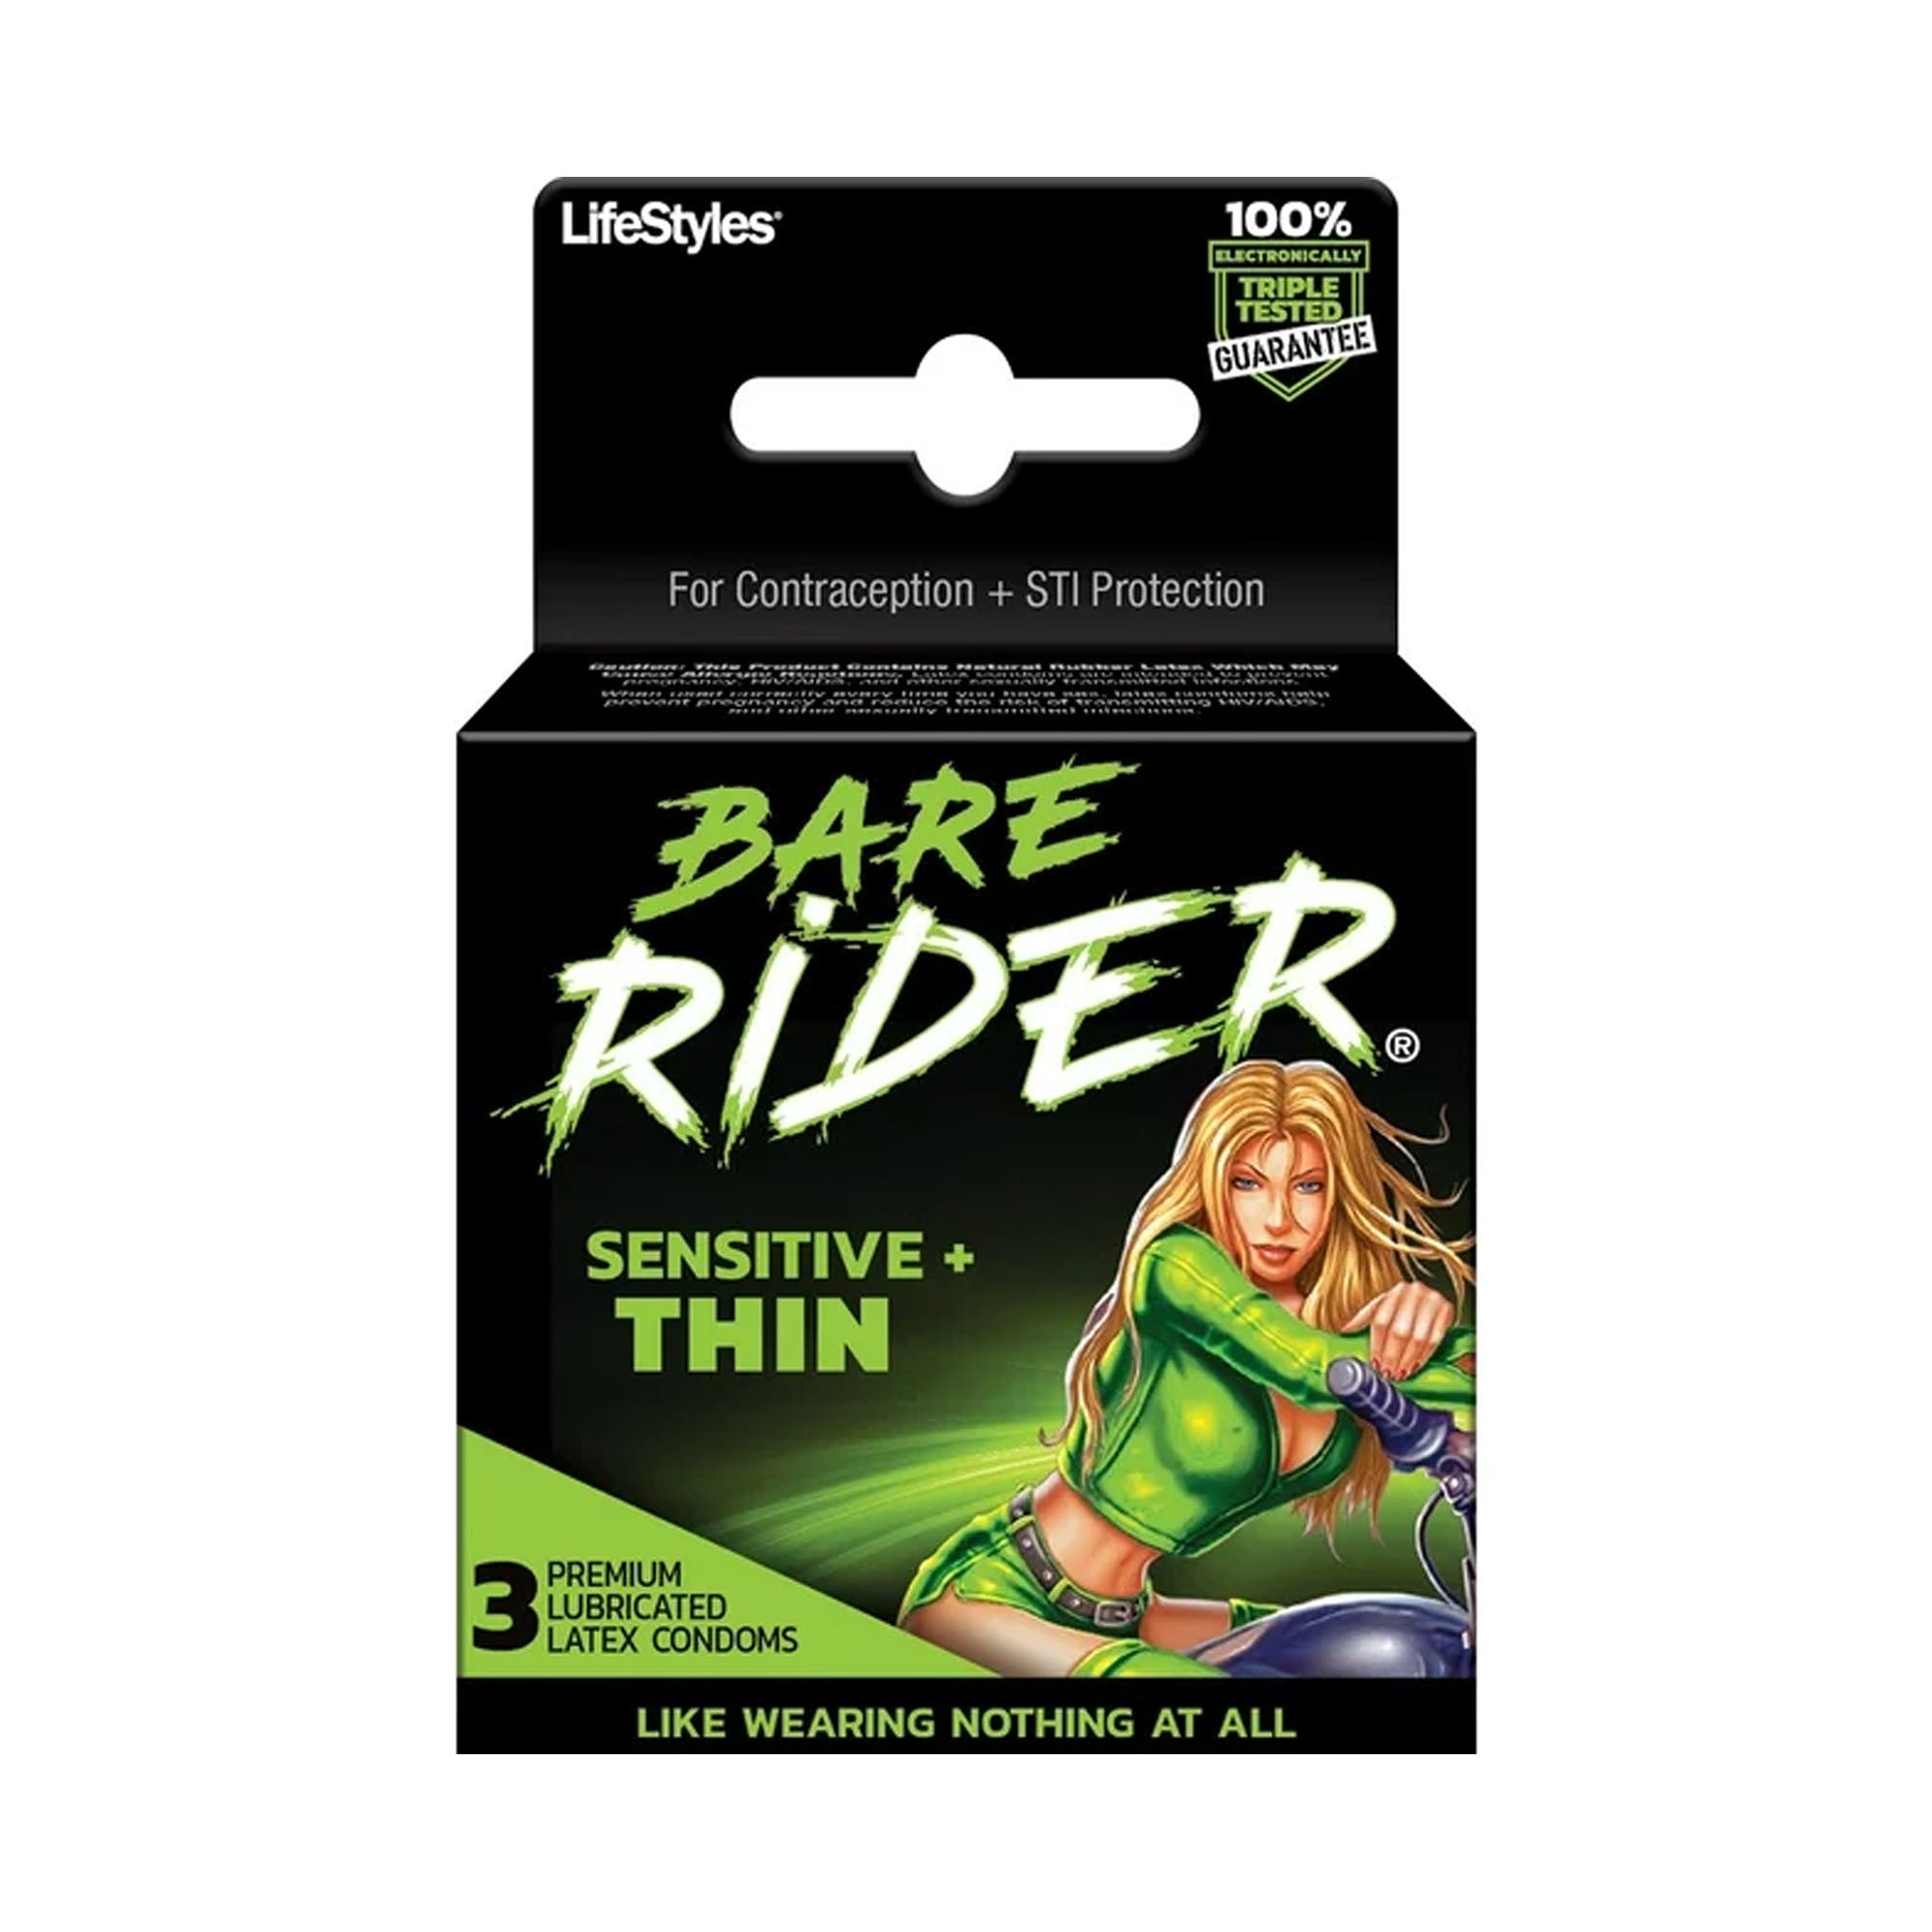 Contempo Bare Rider Thin Condom Pack - Pack of 3